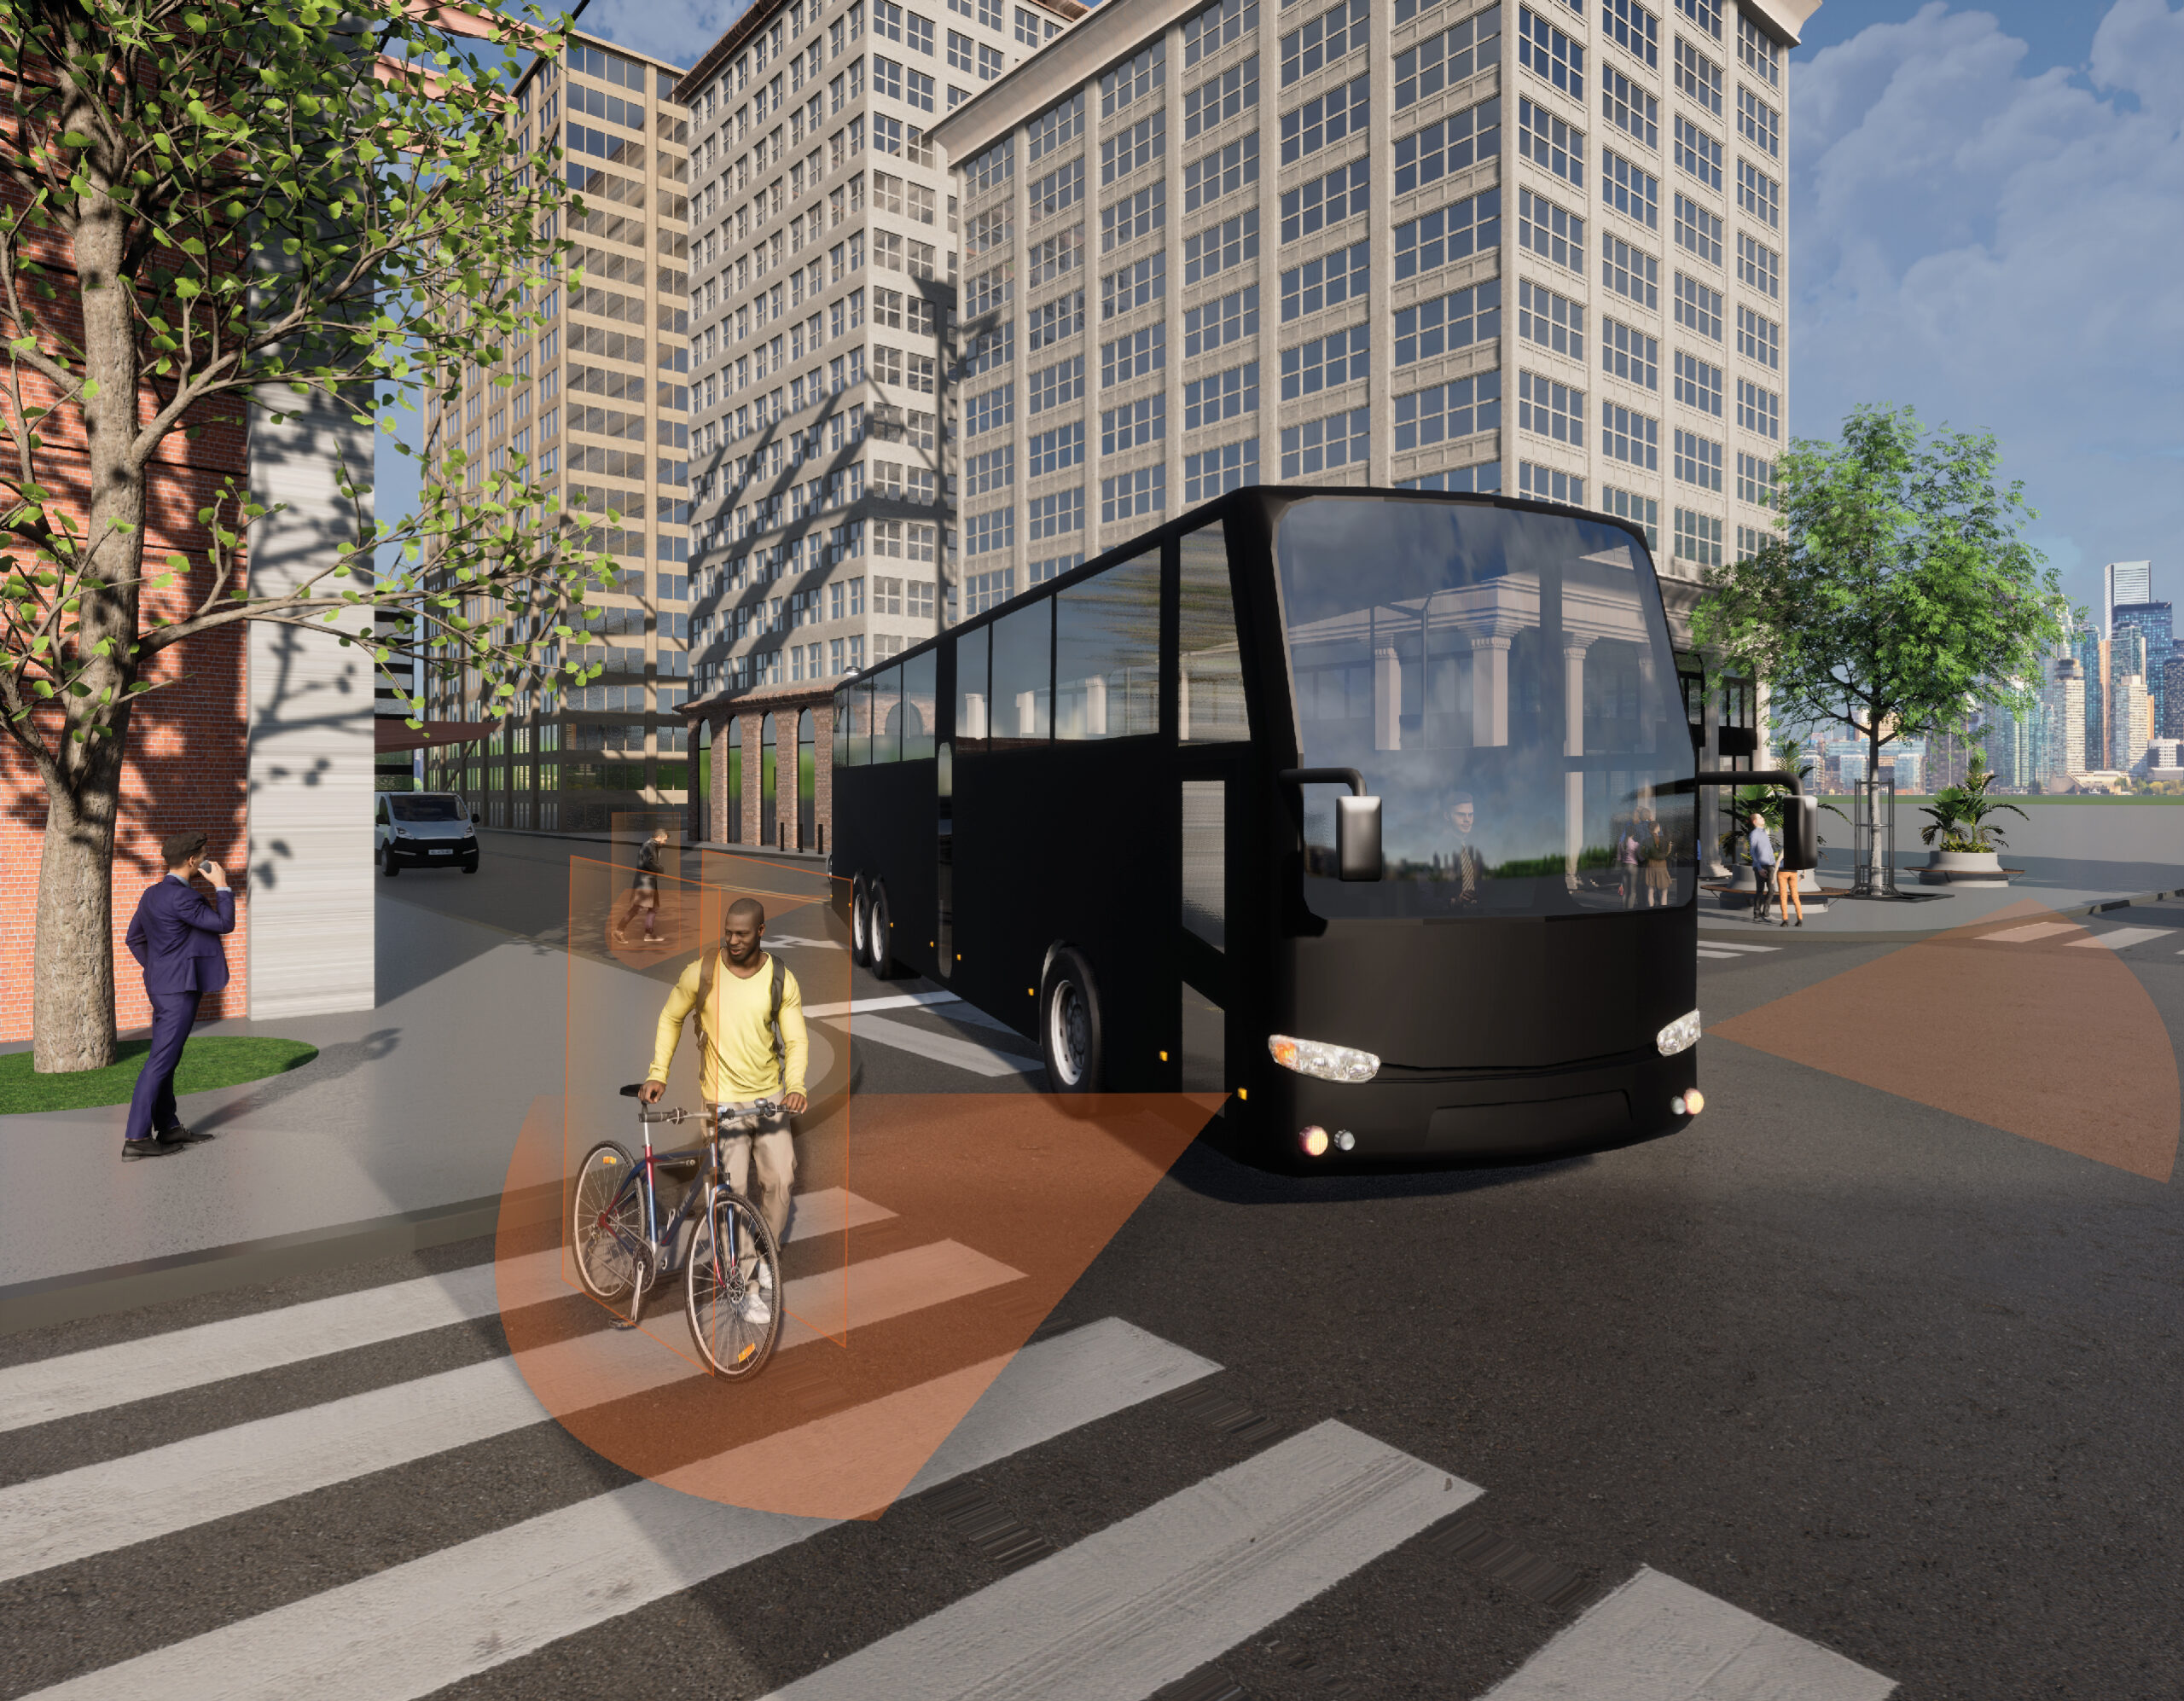 Bus to pedestrian mitigation with collision avoidance